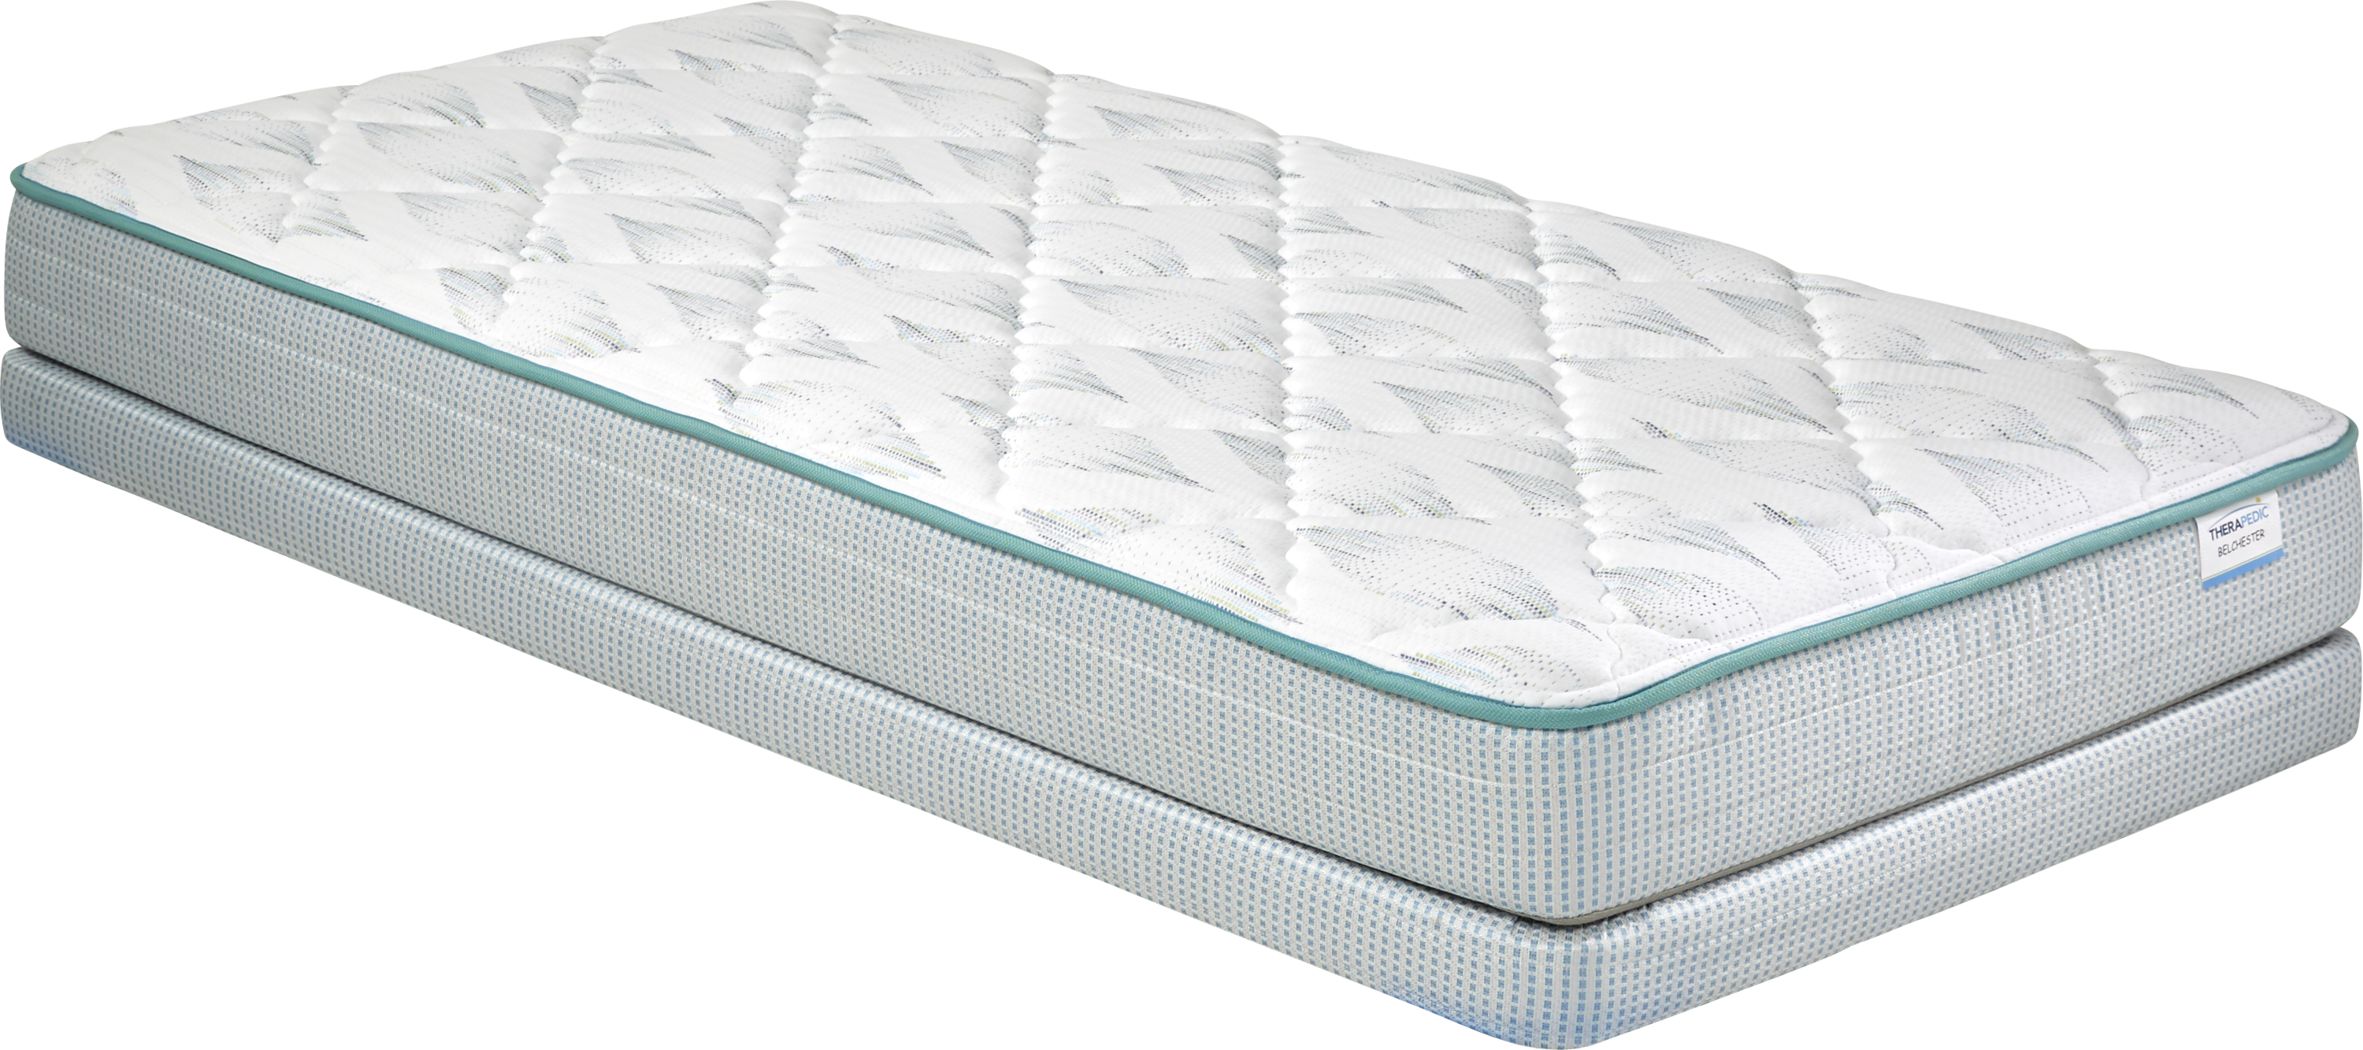 low profile twin mattress